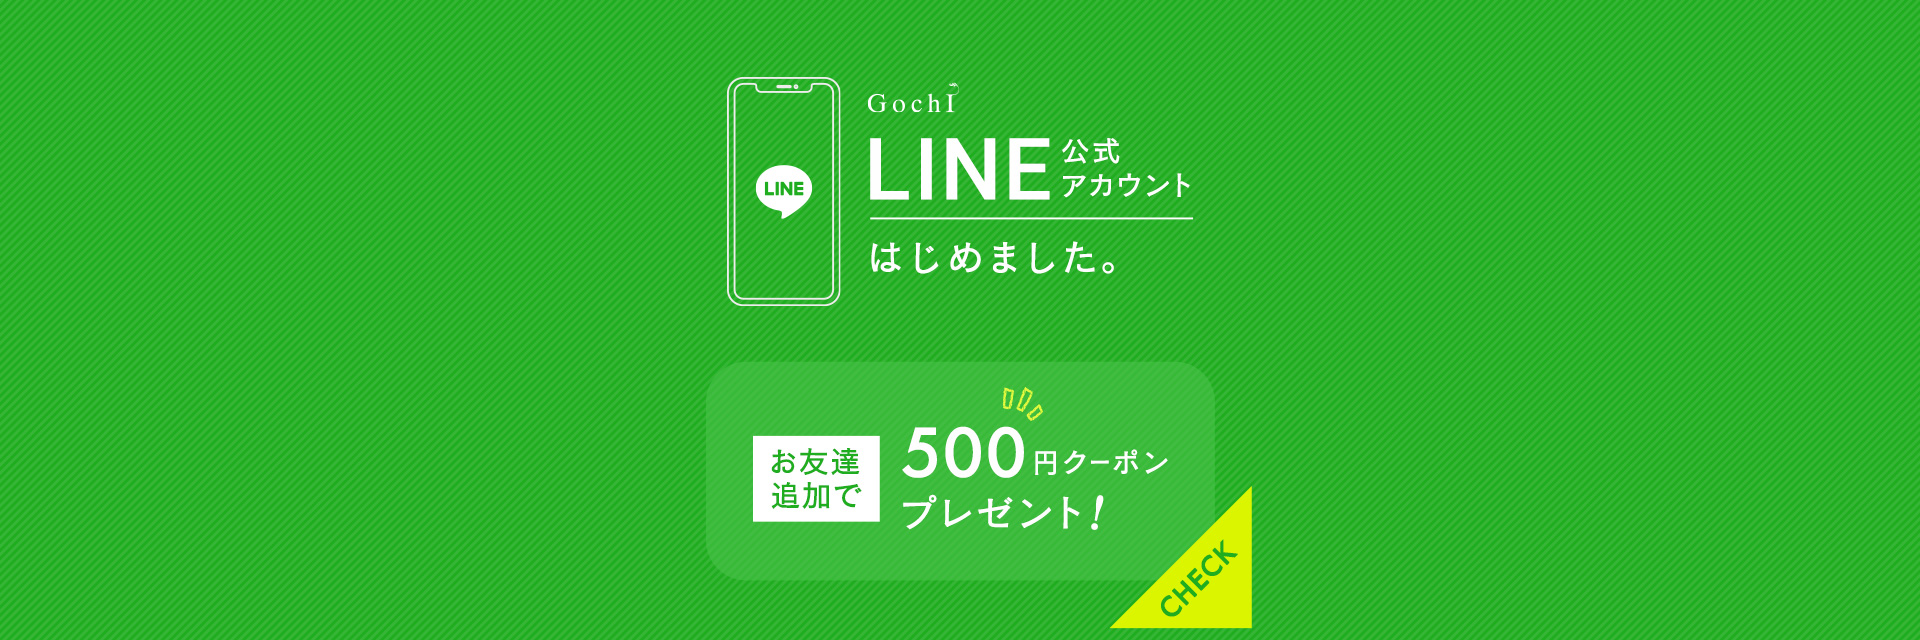 line_sld